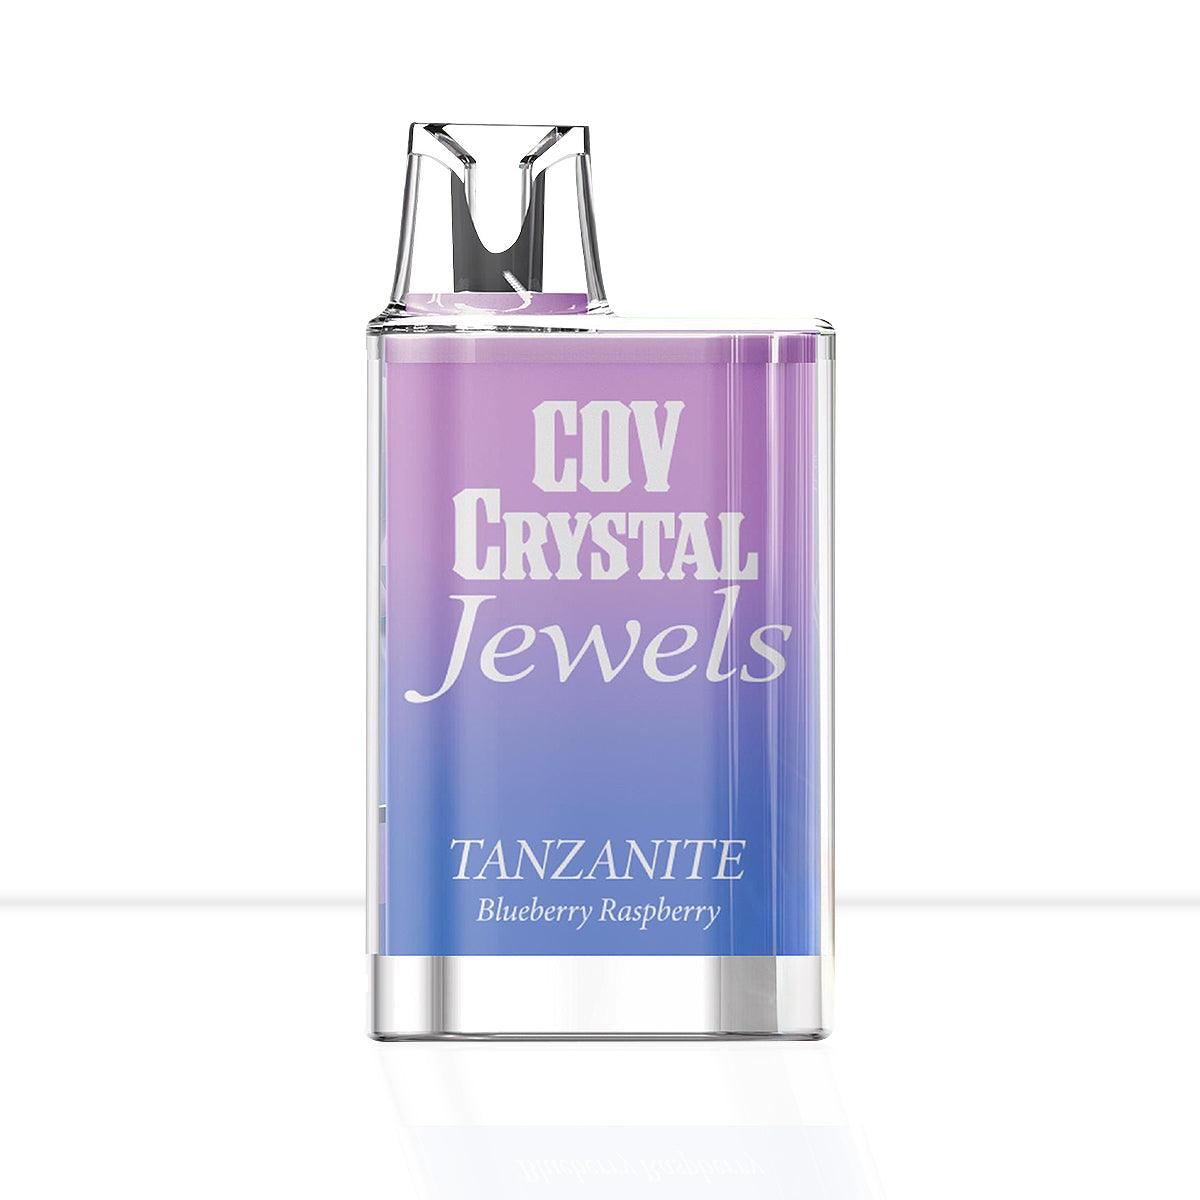 COV Crystal Jewels Blueberry Raspberry Tanzanite Disposable - Vape Kits